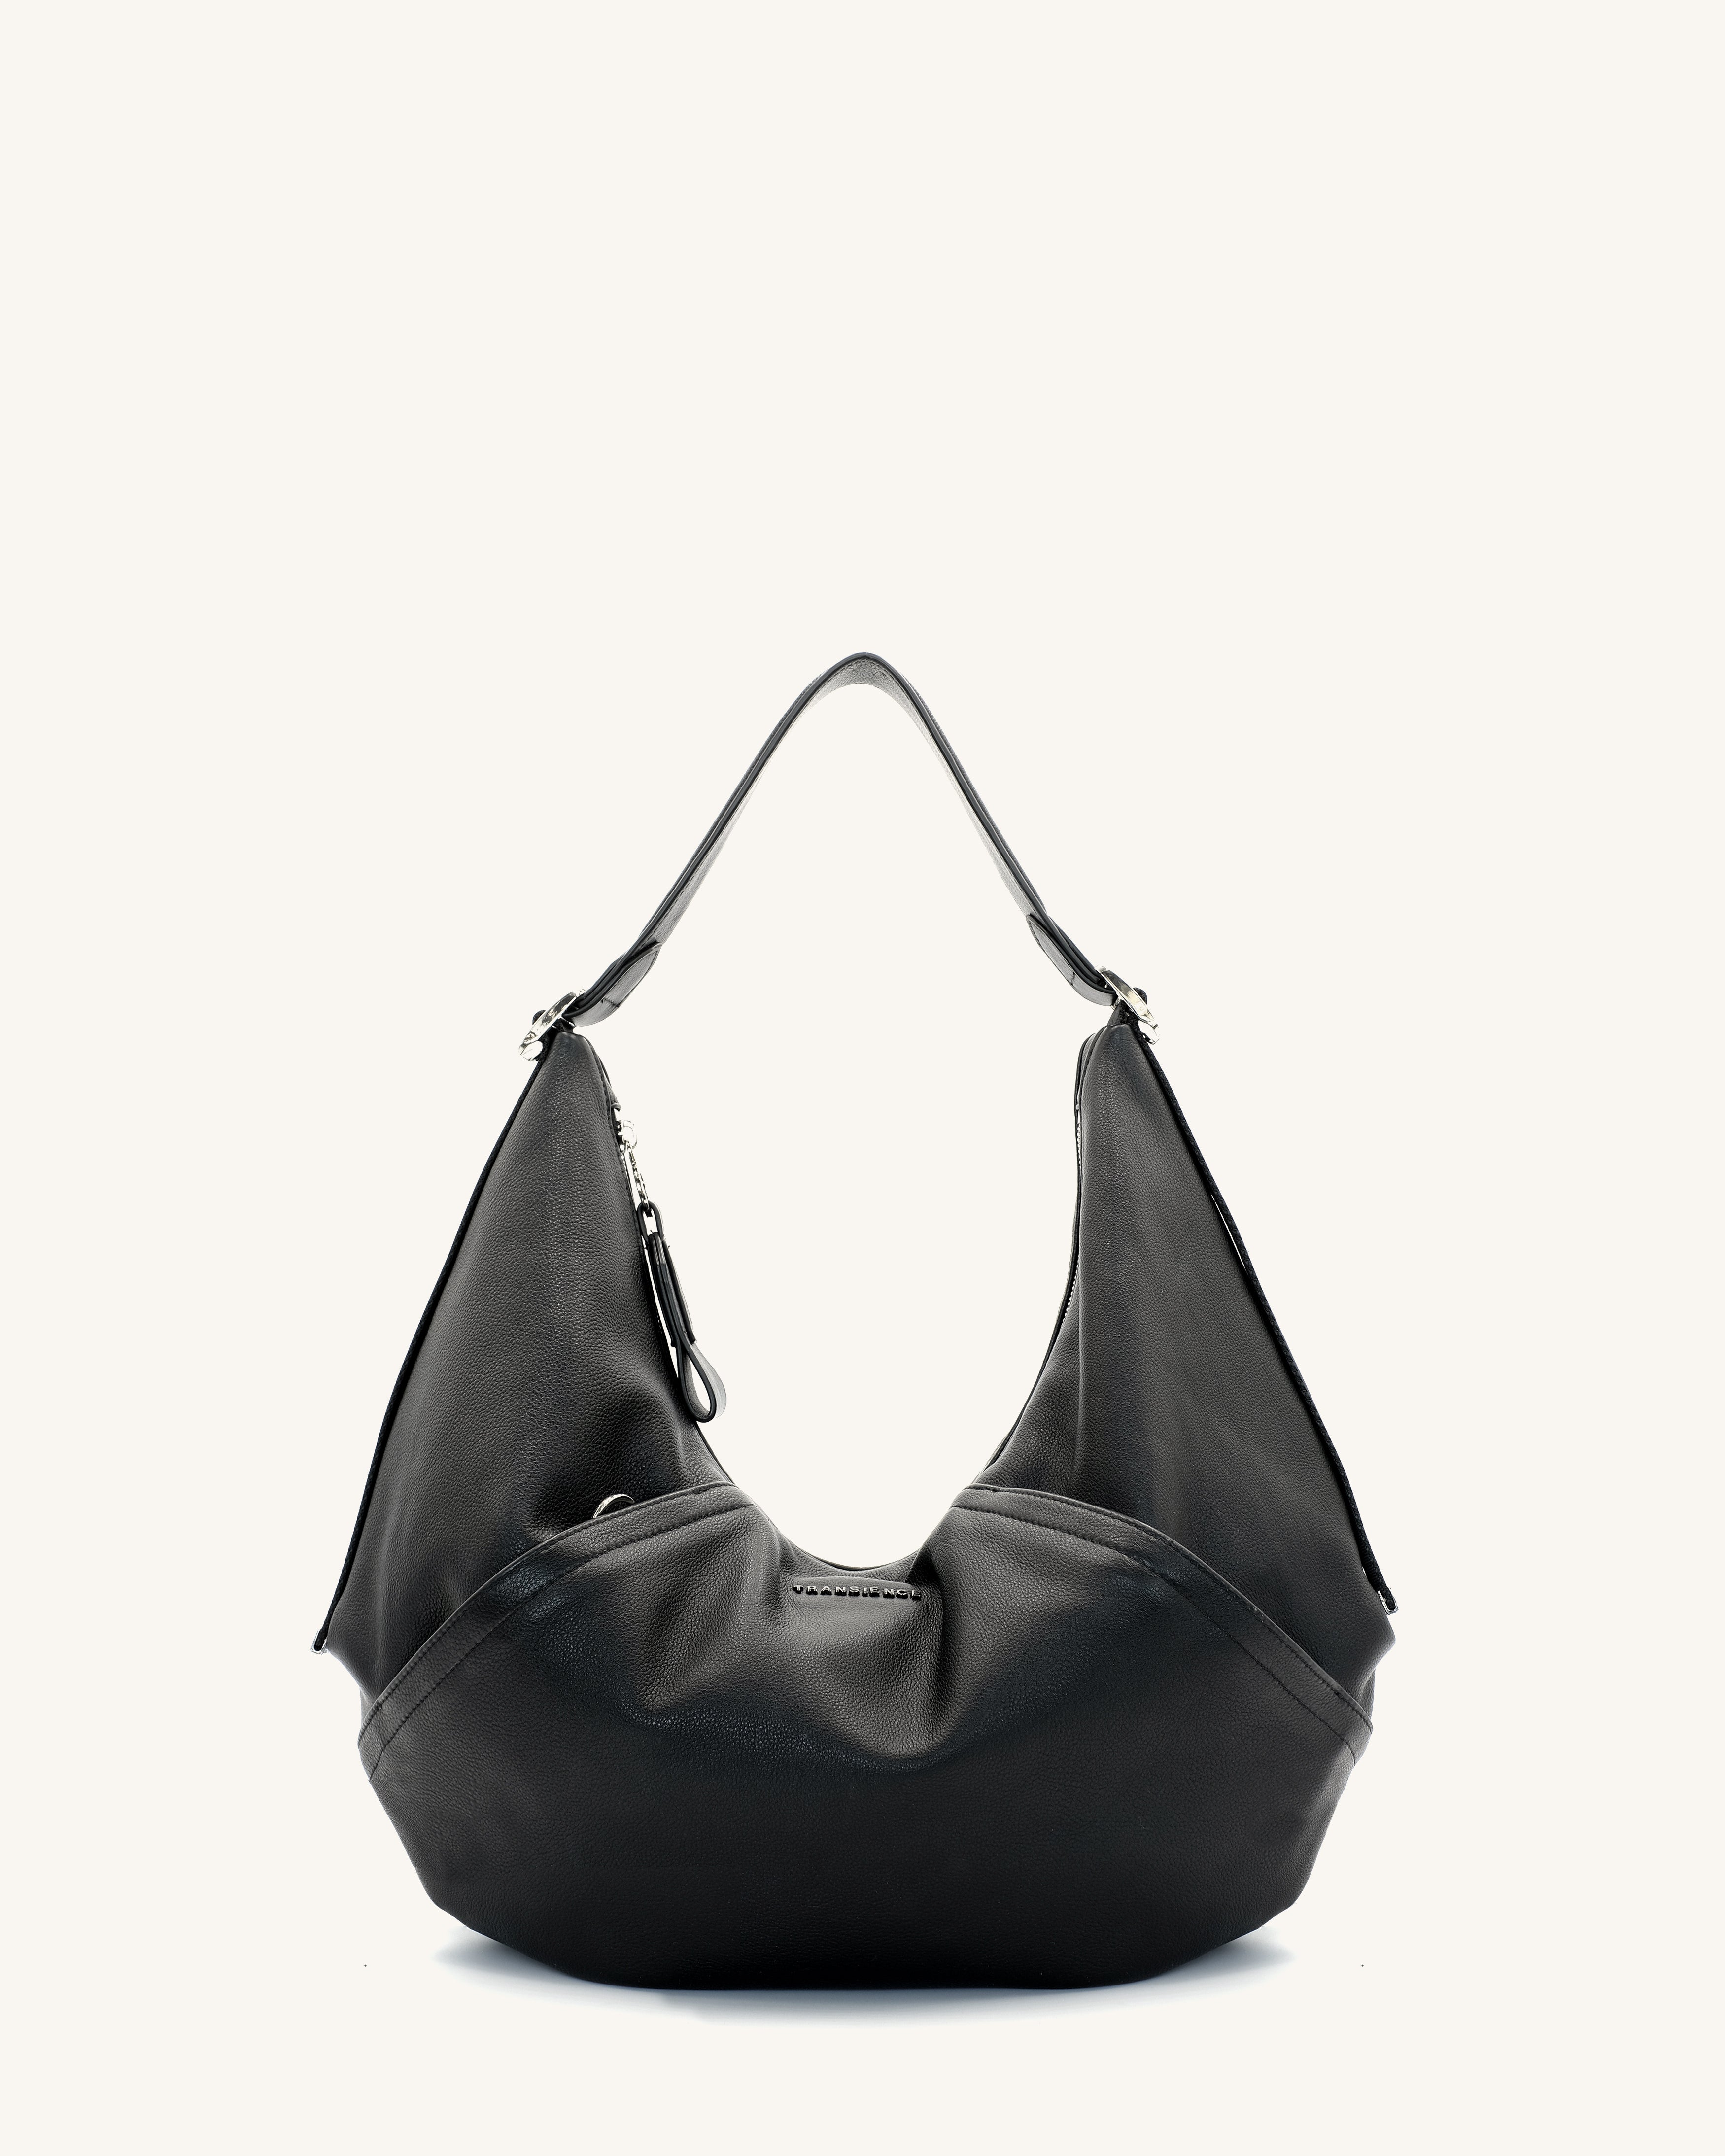 Hammock Bag - Black Pebble Leather – TRANSIENCE